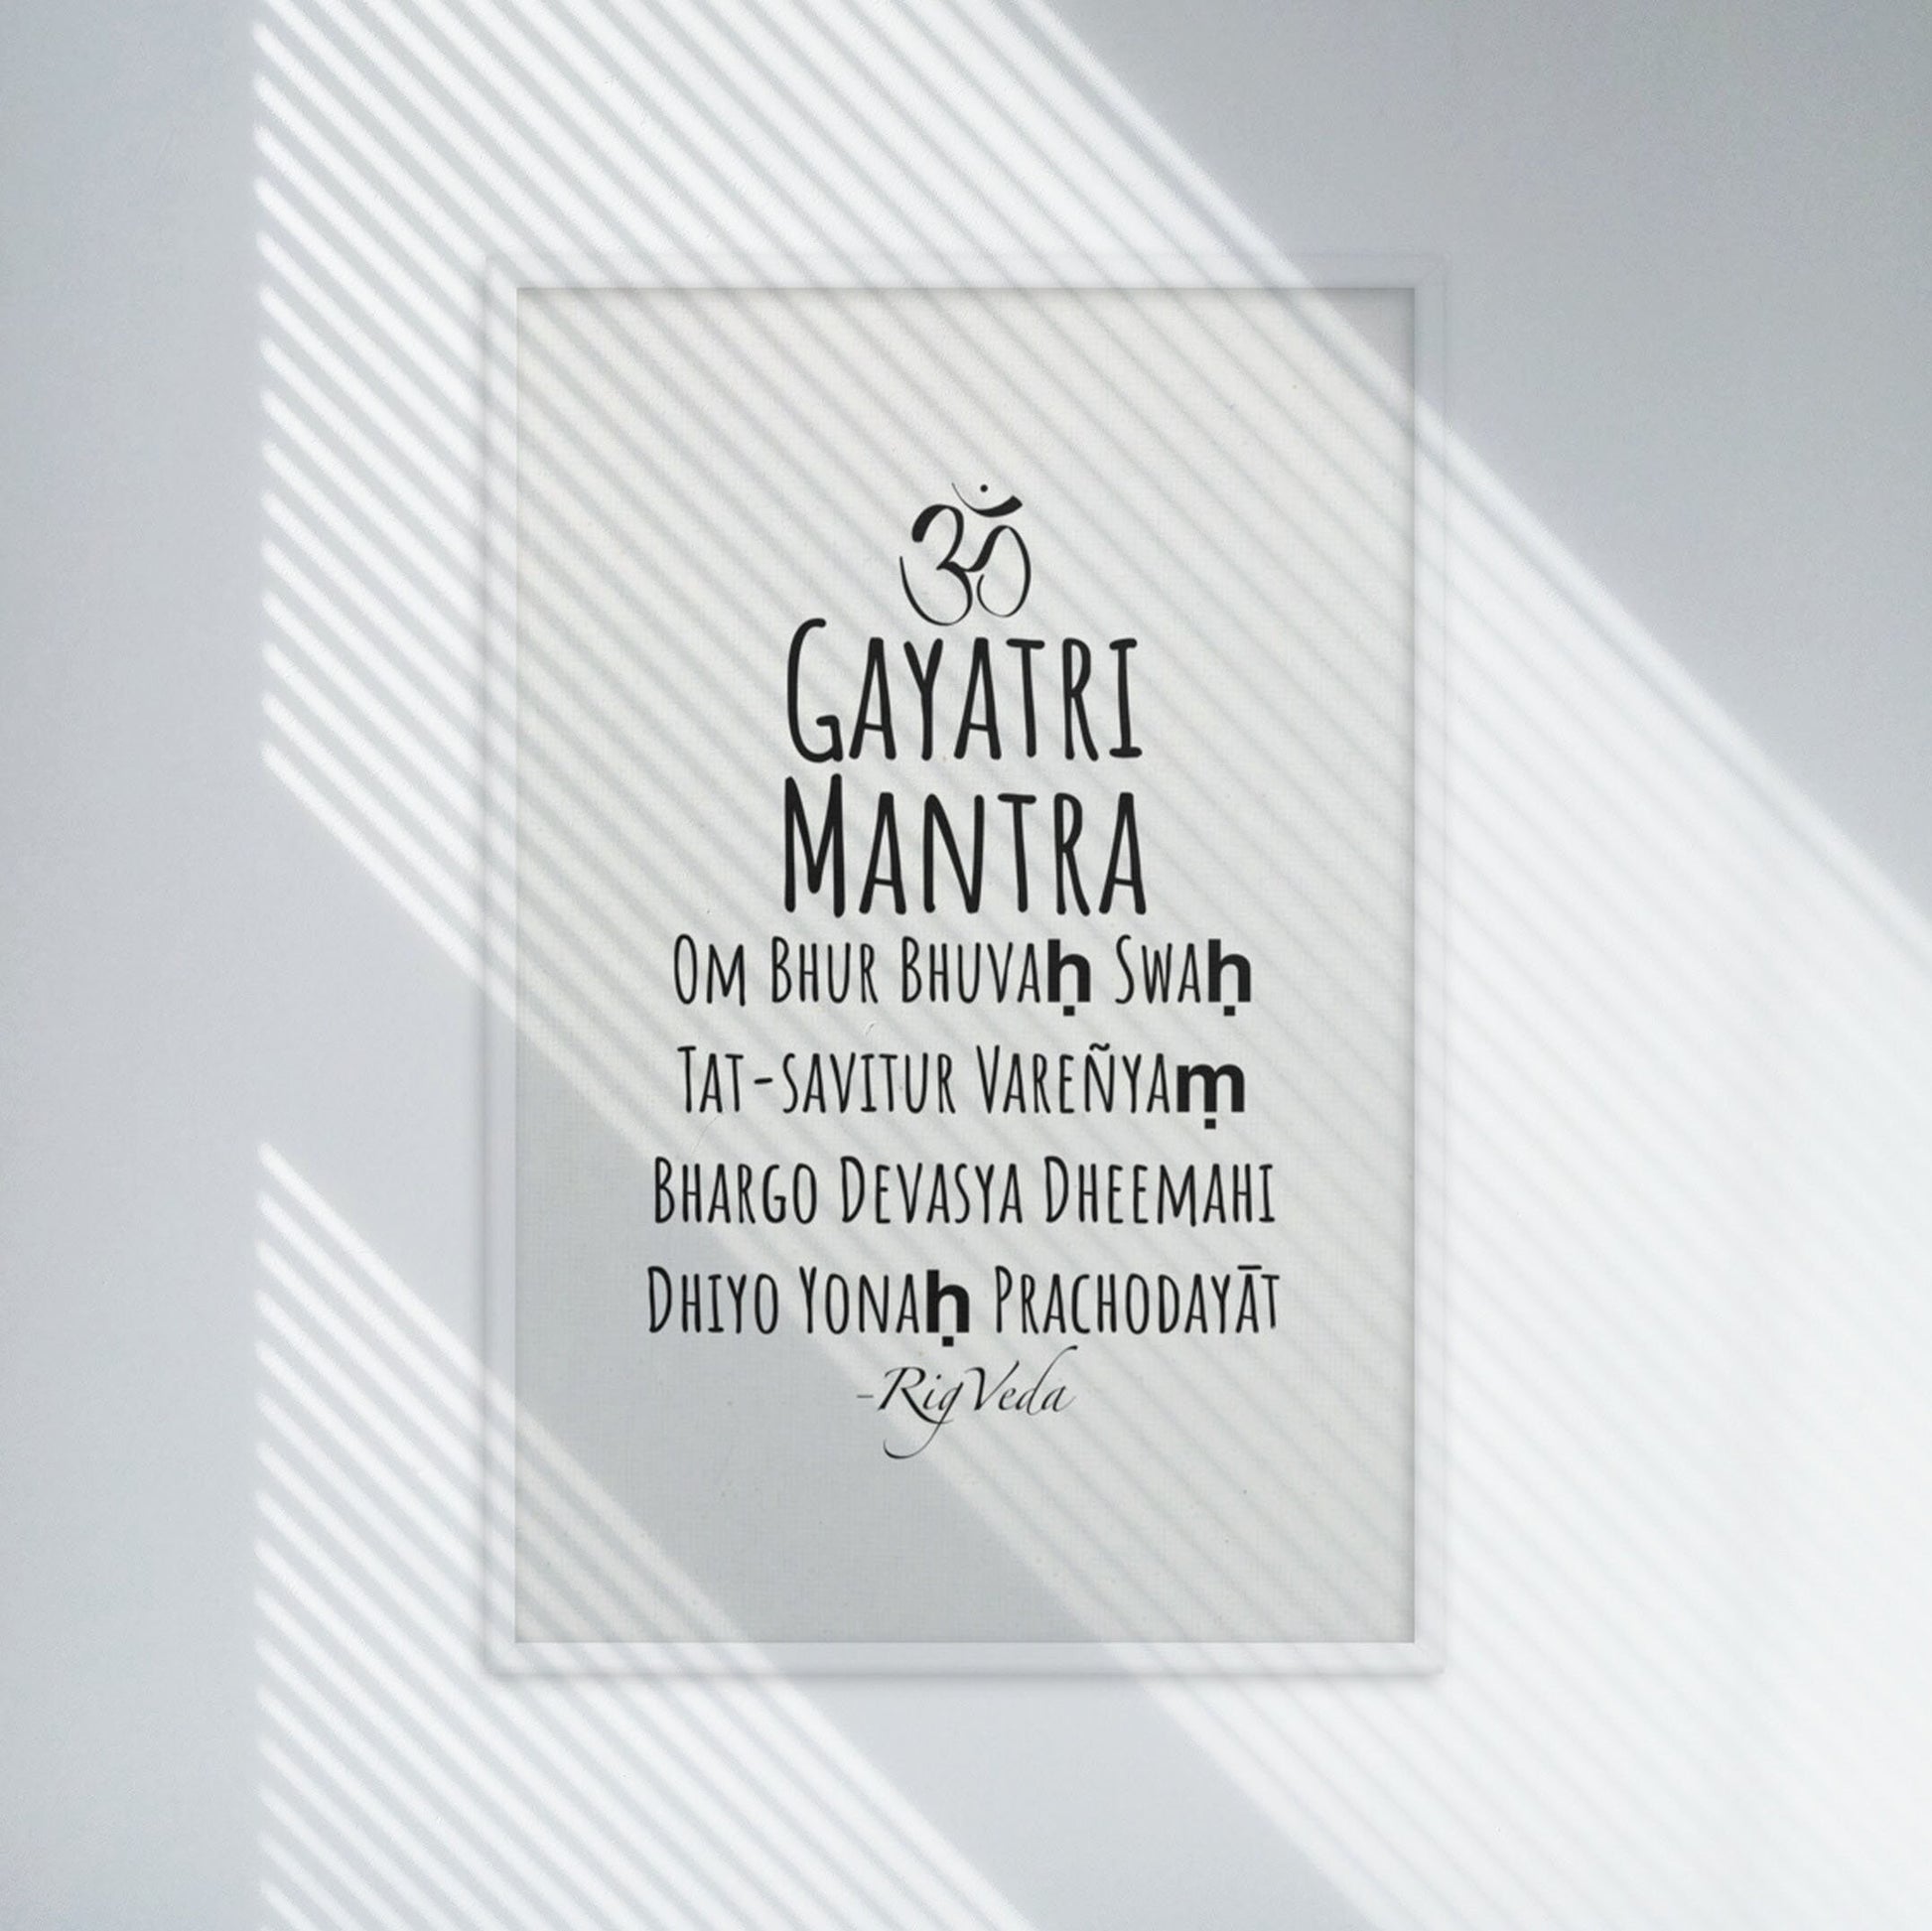 Gayatri mantra in english, black on white minimalist poster in white frame.